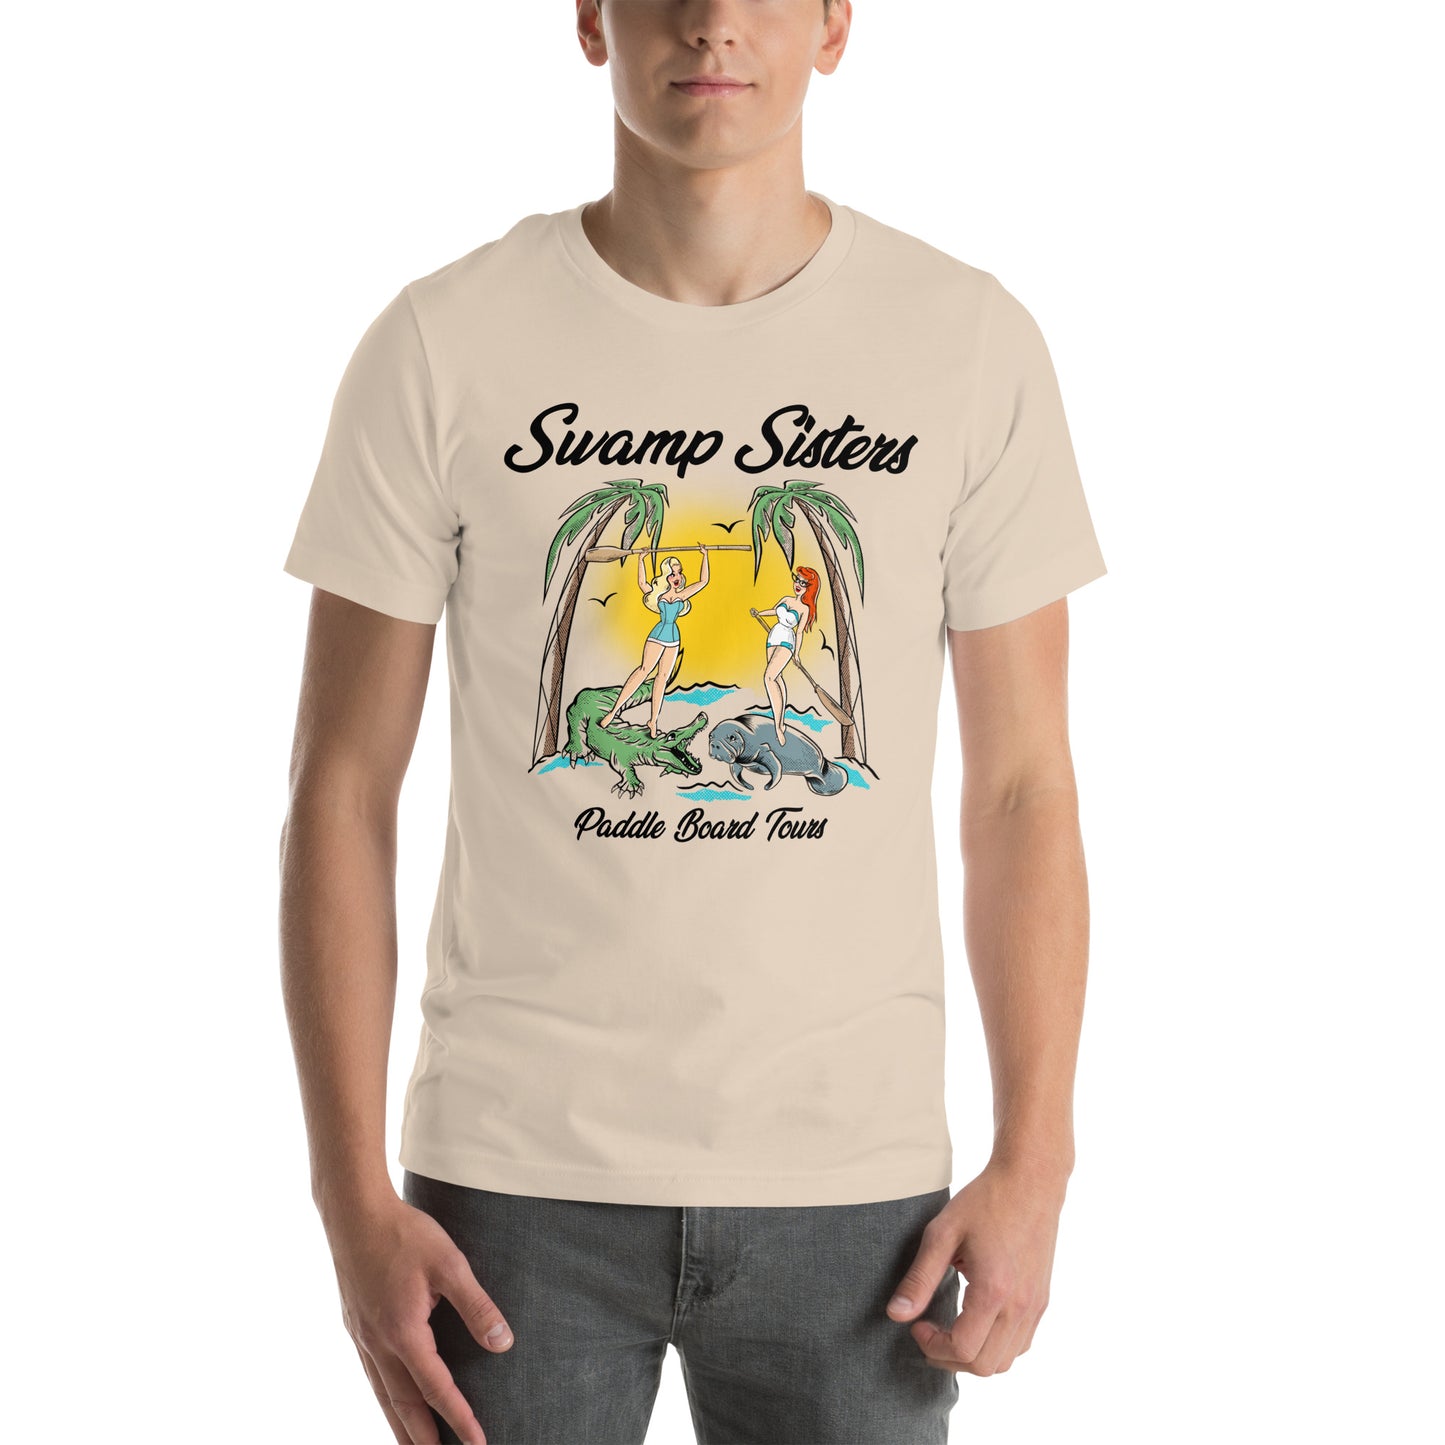 Swamp Sister's Paddle Board Tour Short-sleeve unisex t-shirt